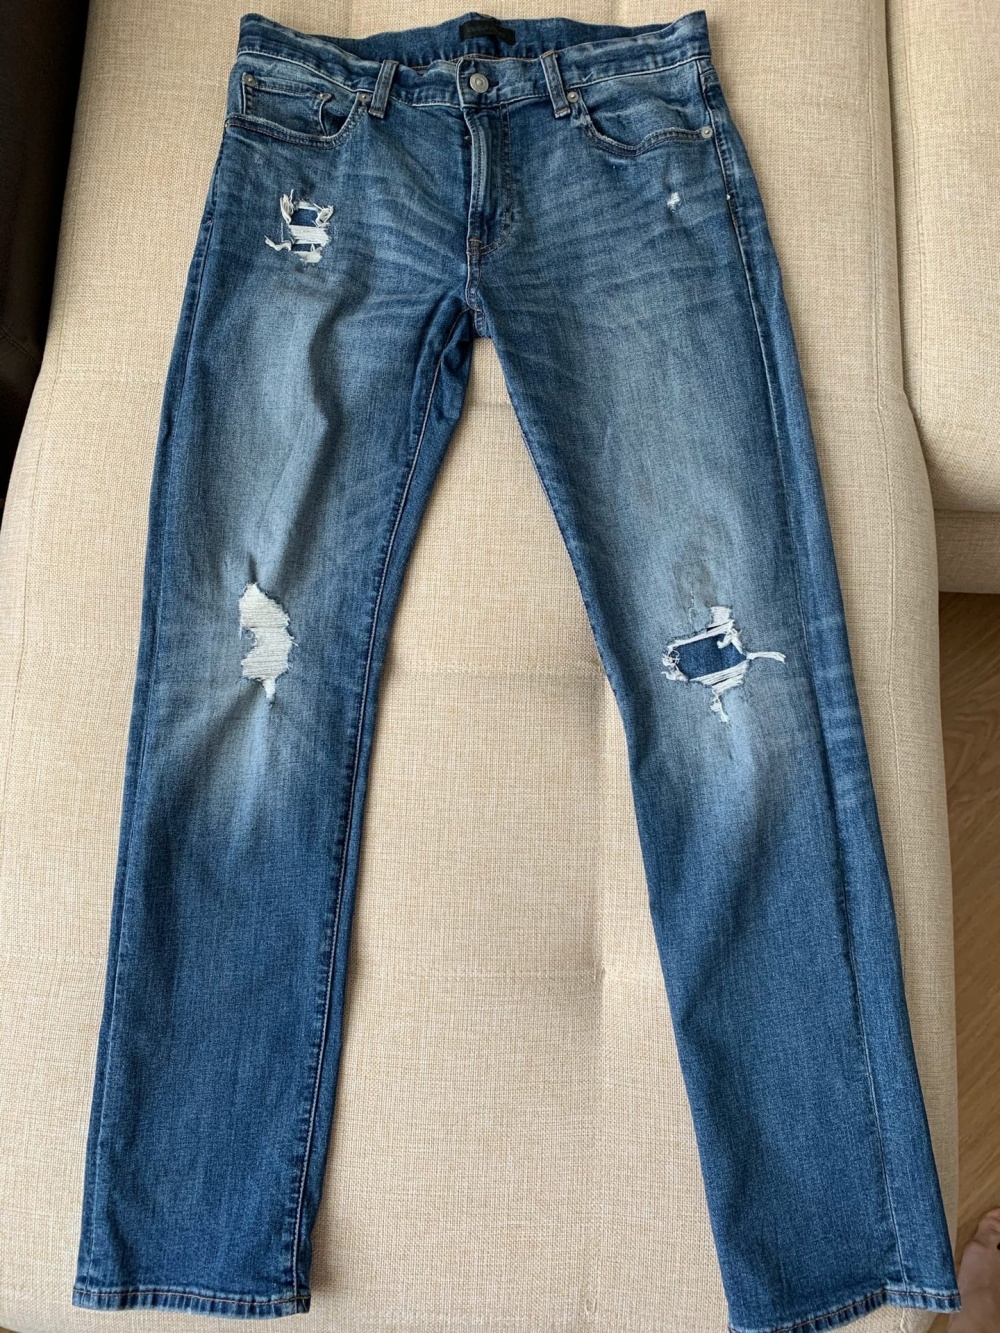 Сет джинсы Uniqlo размер 32, брюки Mango размер 40